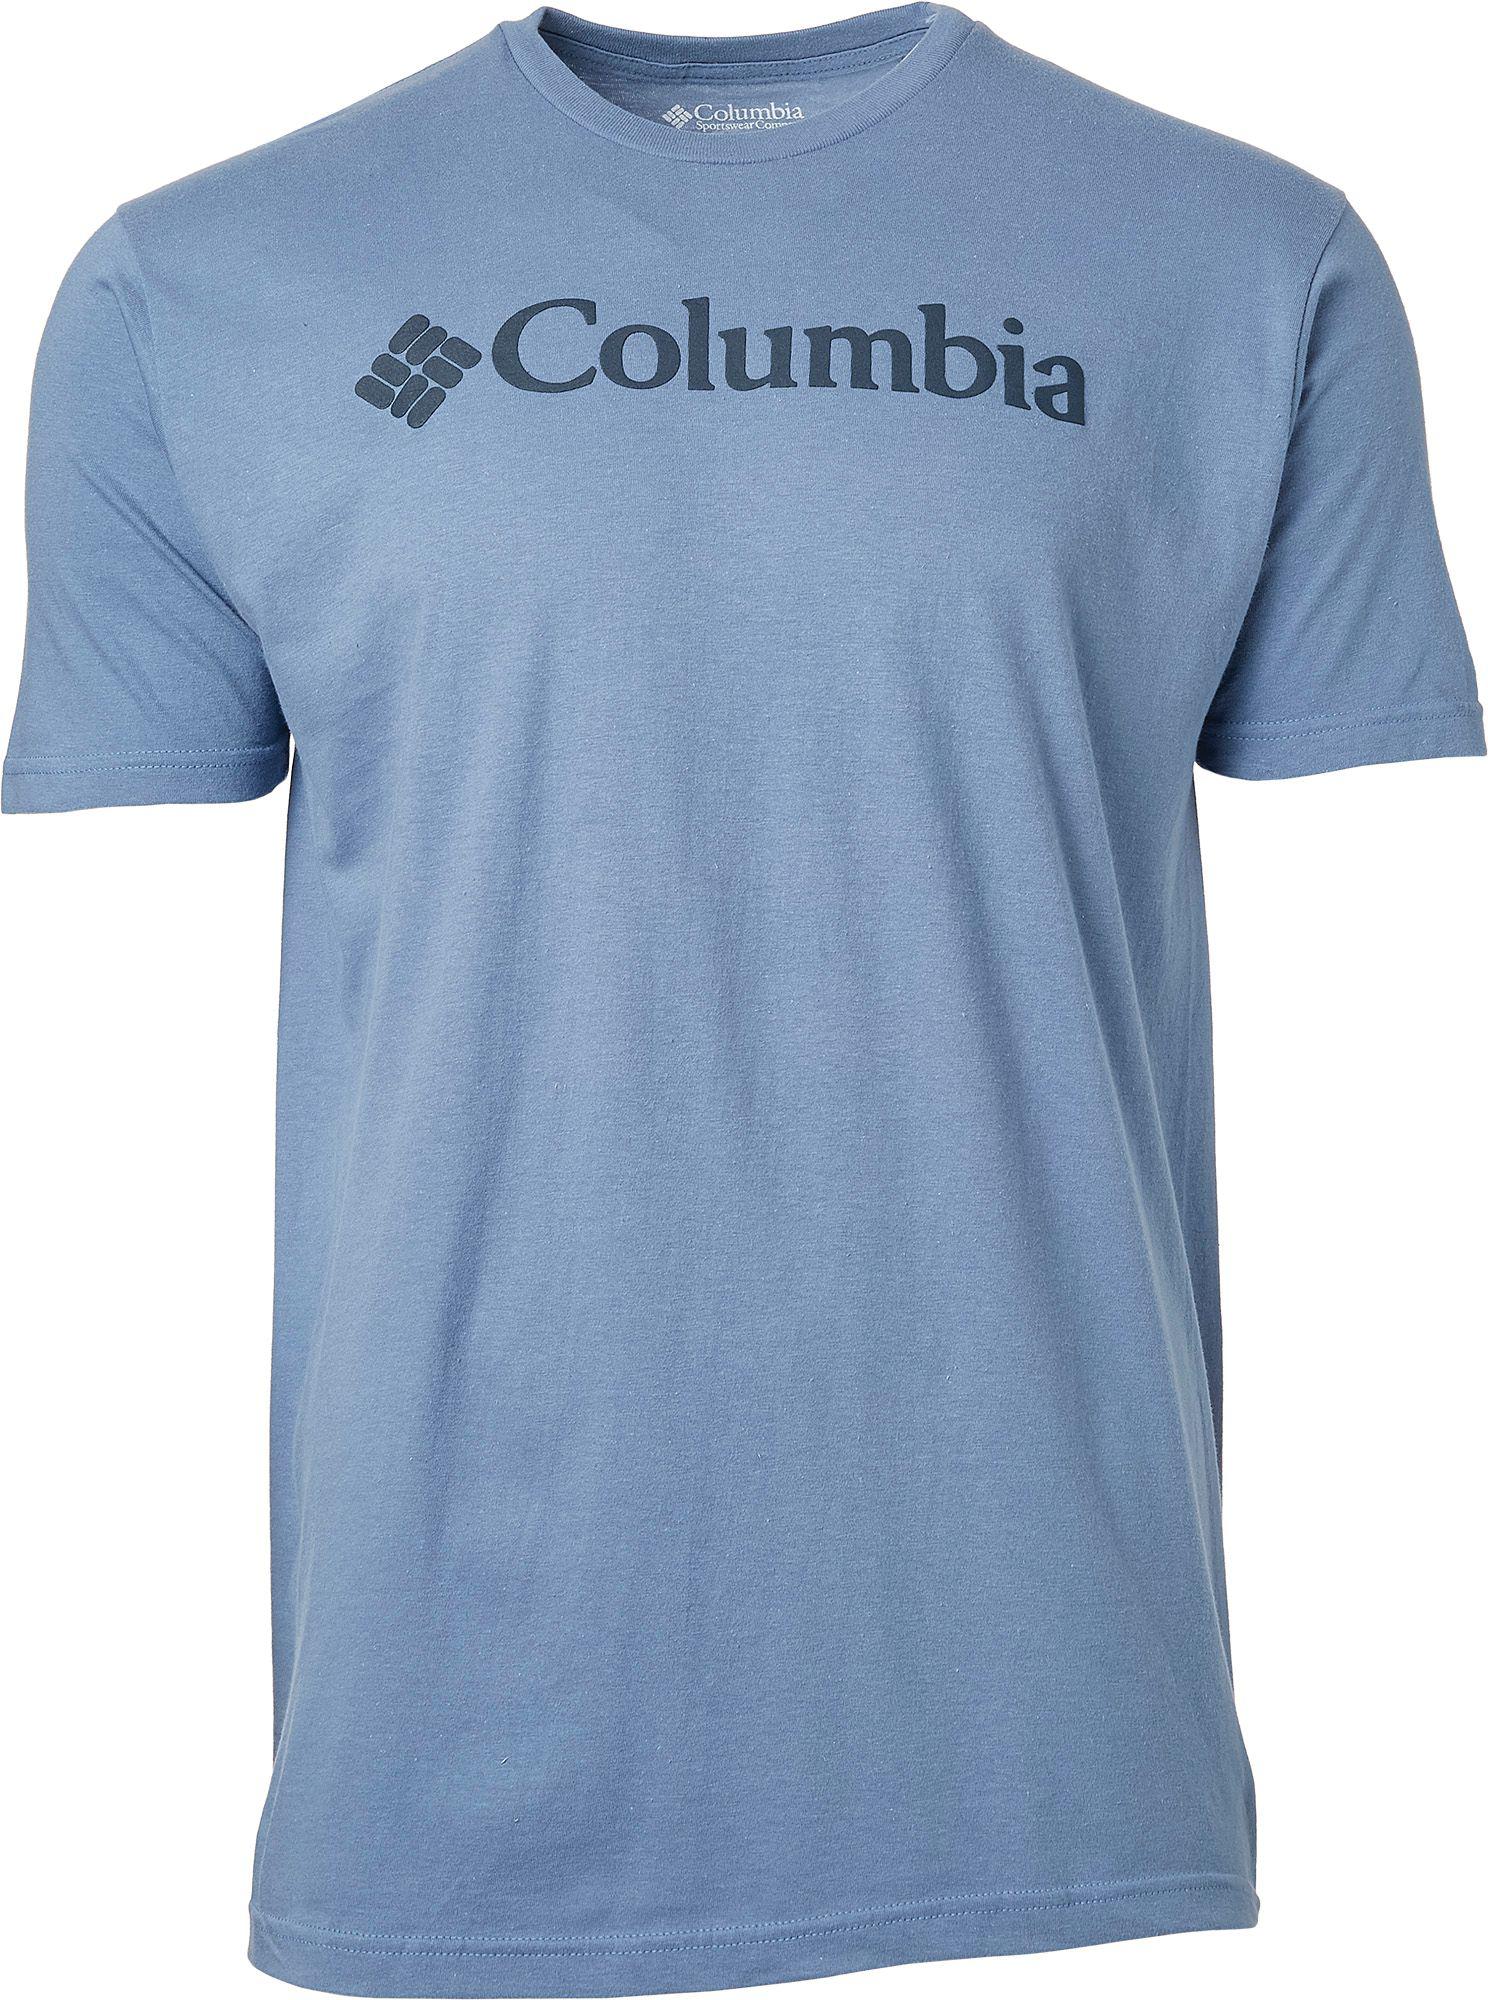 columbia t shirt